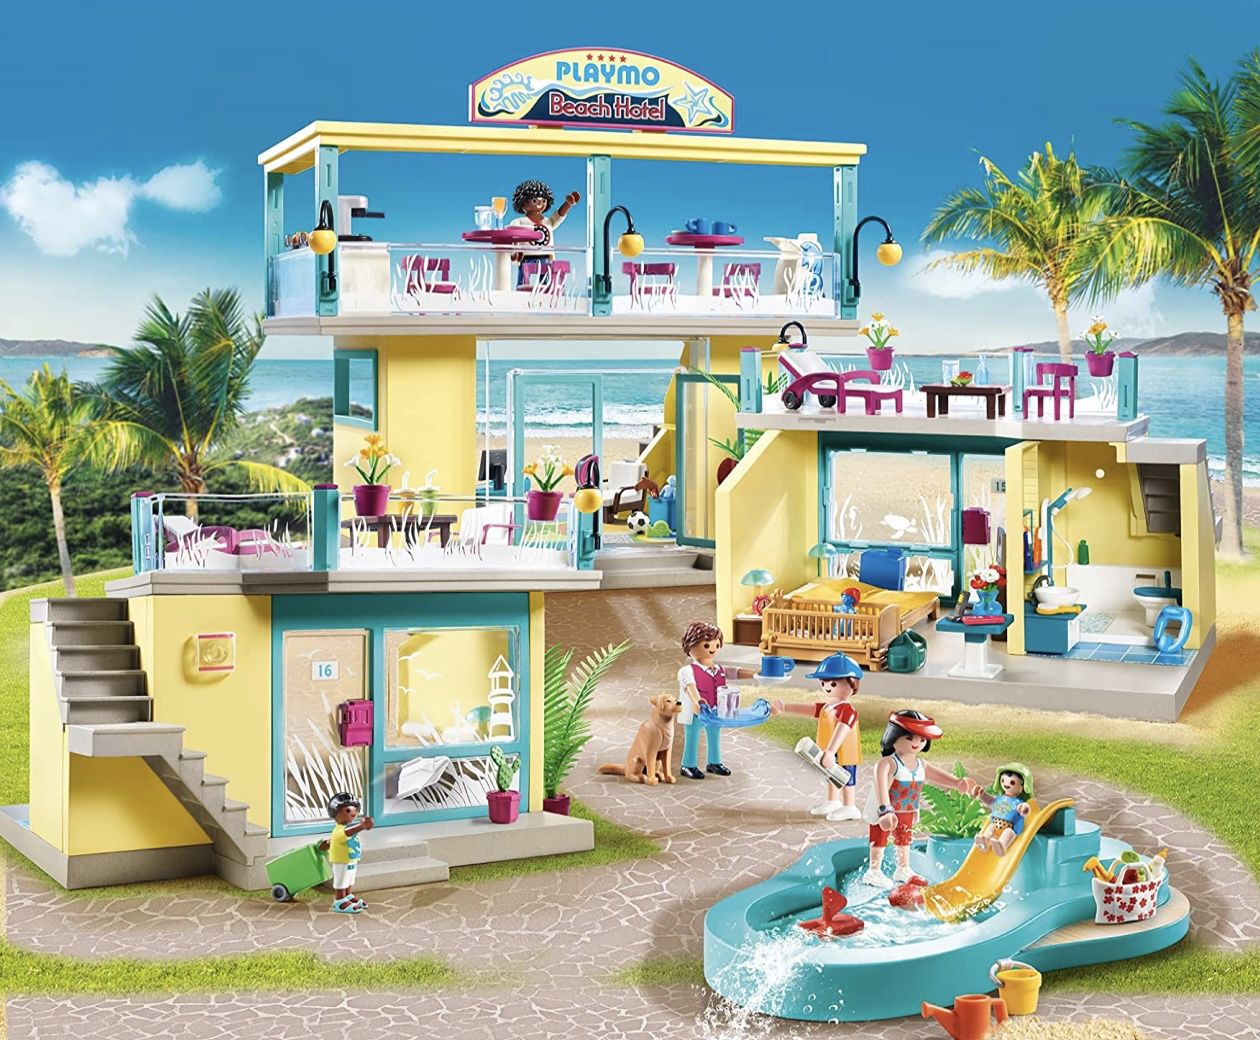 Playmobil Family Fun   Beach Hotel (70434) für 49,99€ (statt 70€)